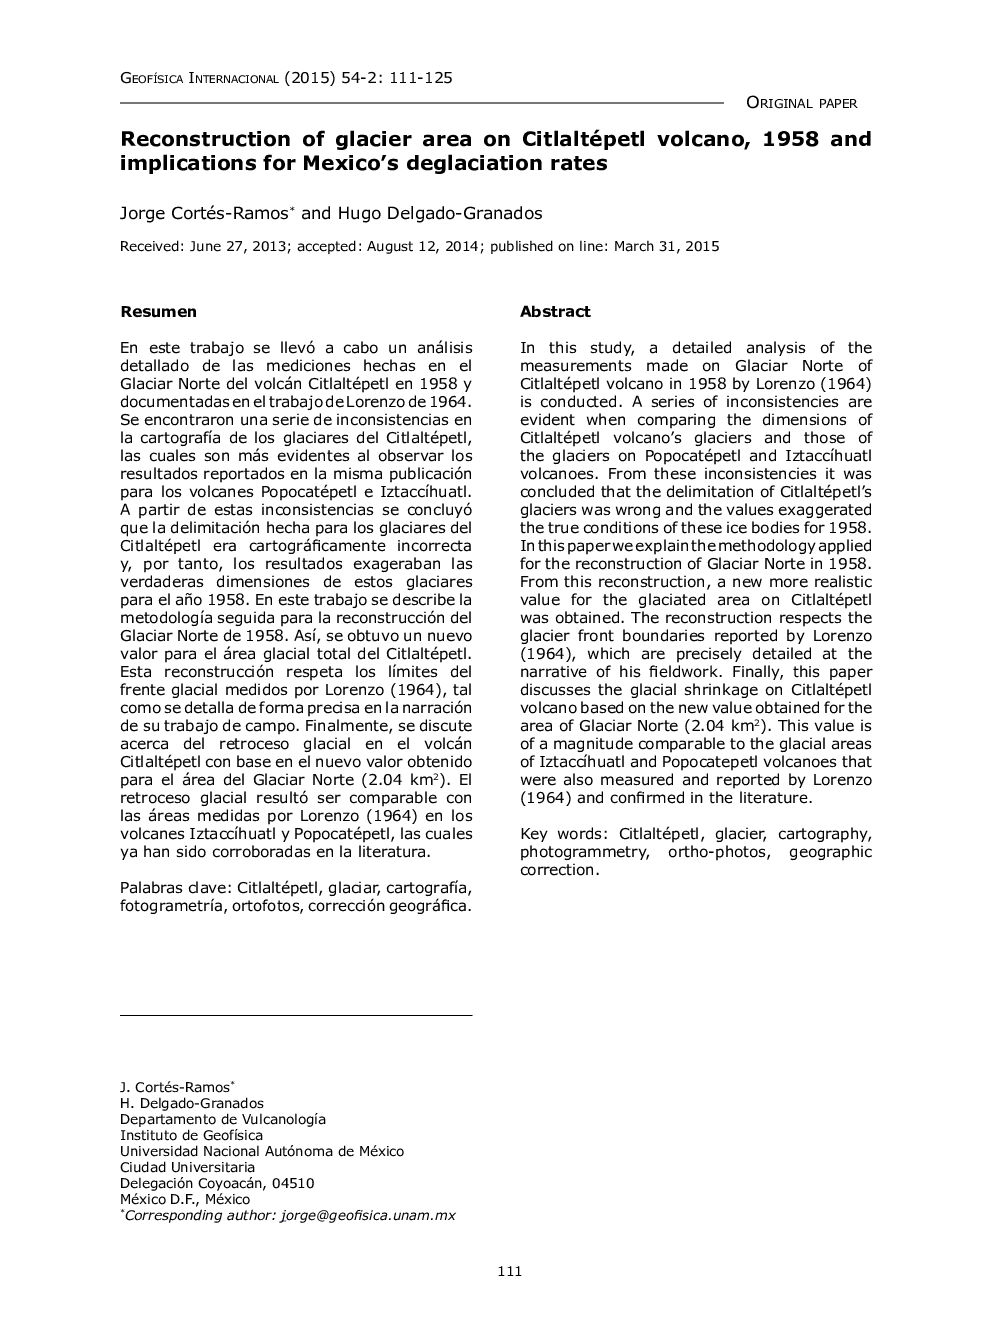 Reconstruction of glacier area on Citlaltépetl volcano, 1958 and implications for Mexico's deglaciation rates